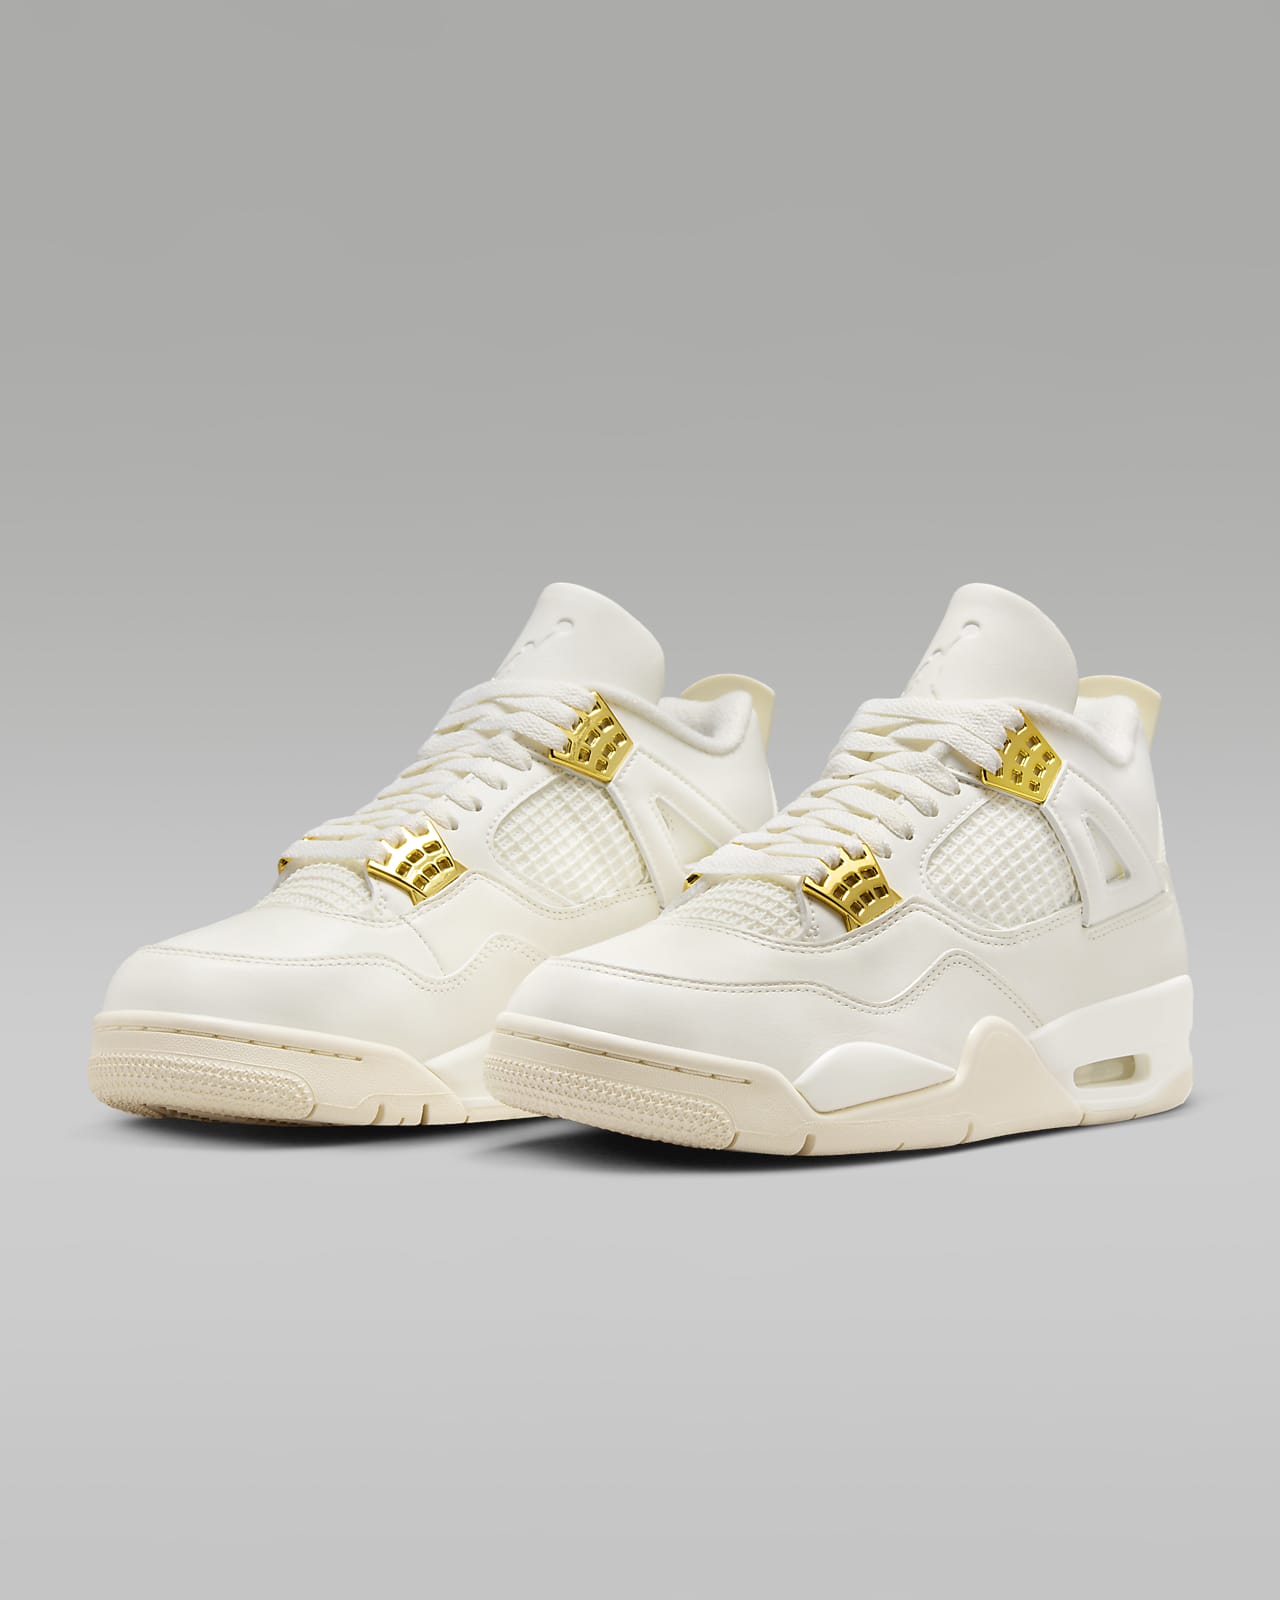 19,670円Nike WMNS Air Jordan 4 White \u0026 Gold